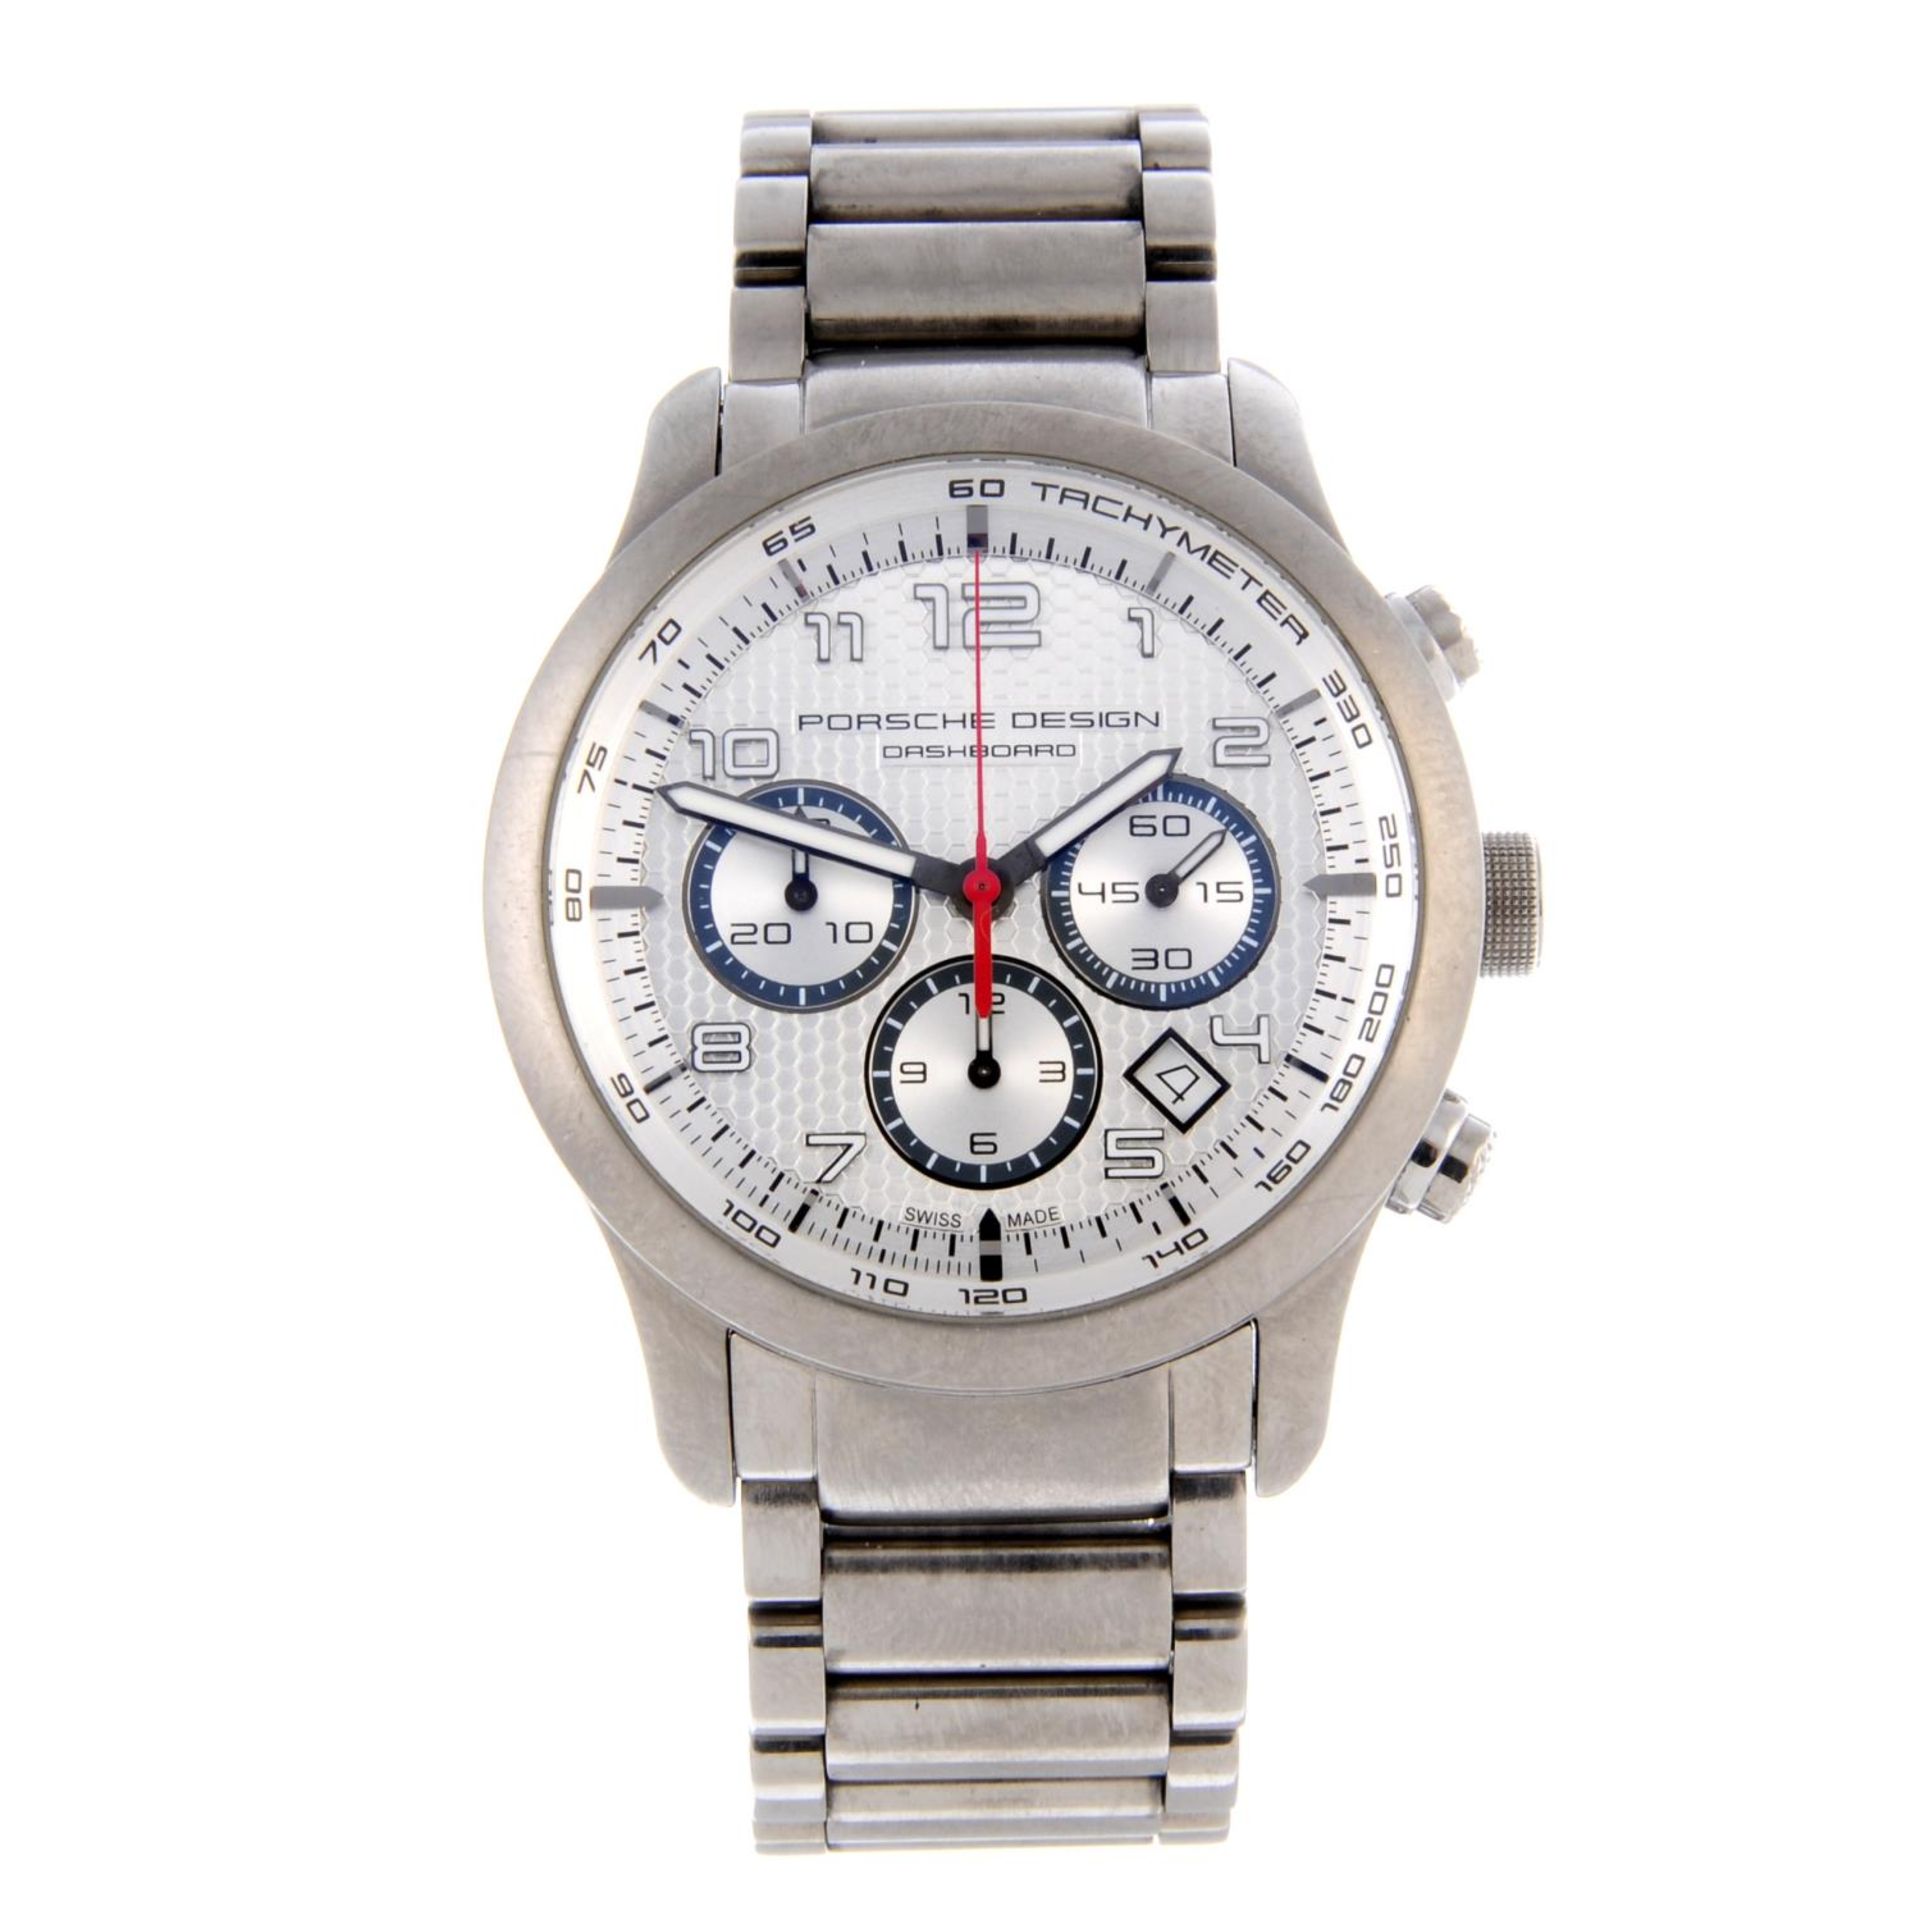 PORSCHE DESIGN - a gentleman's Dashboard chronograph bracelet watch.